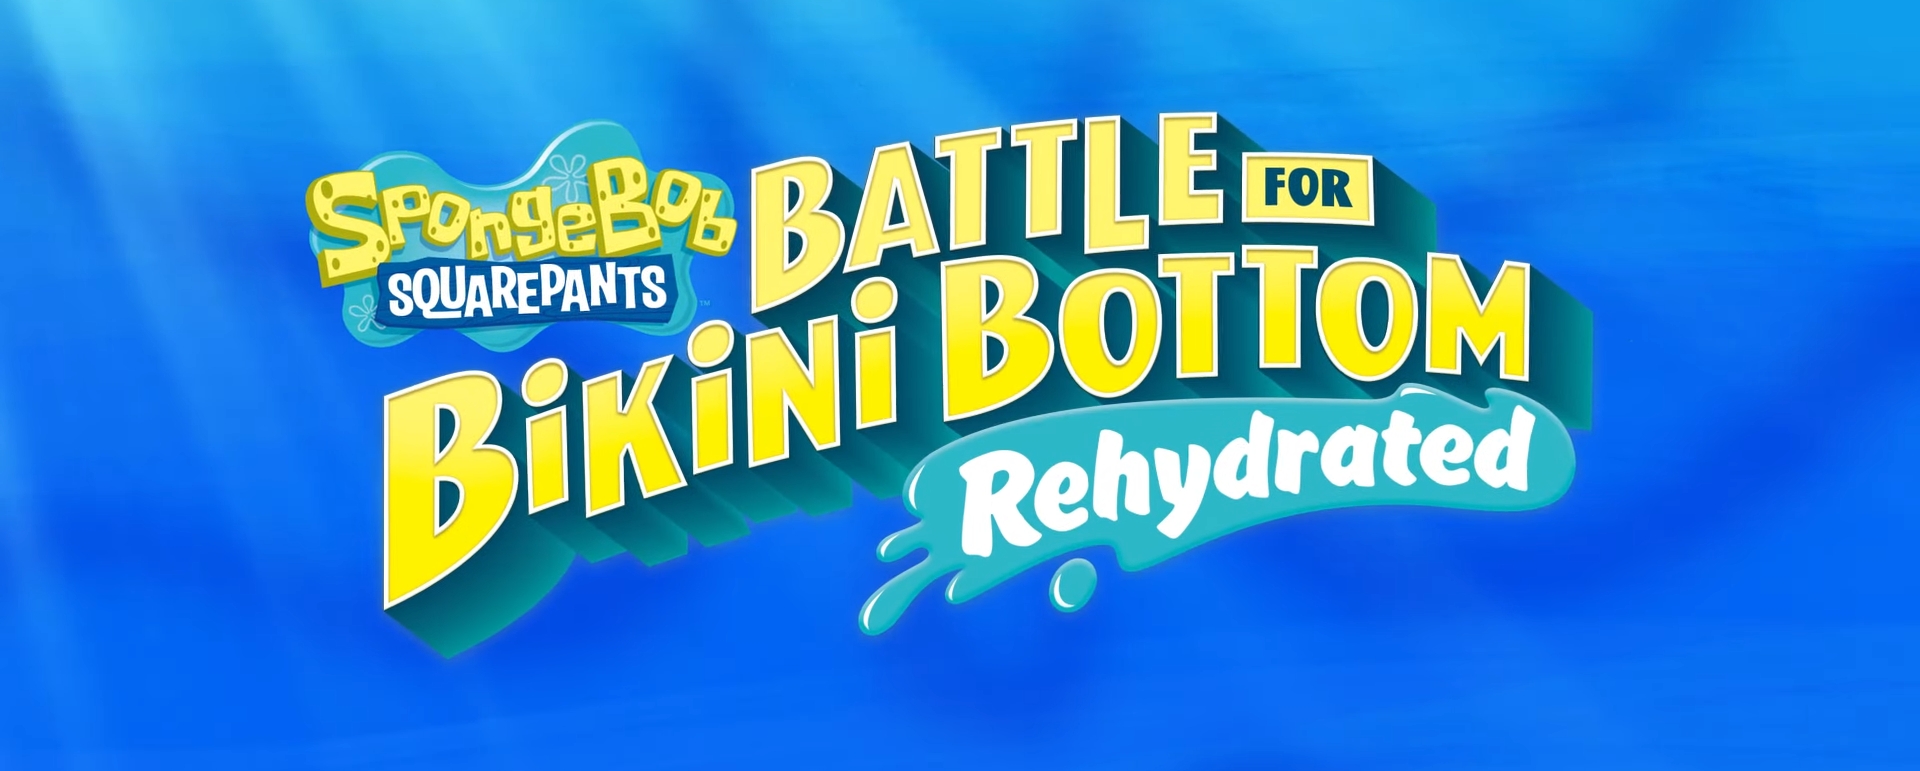 'SpongeBob SquarePants: Battle for Bikini Bottom Rehydrated' coming 2020